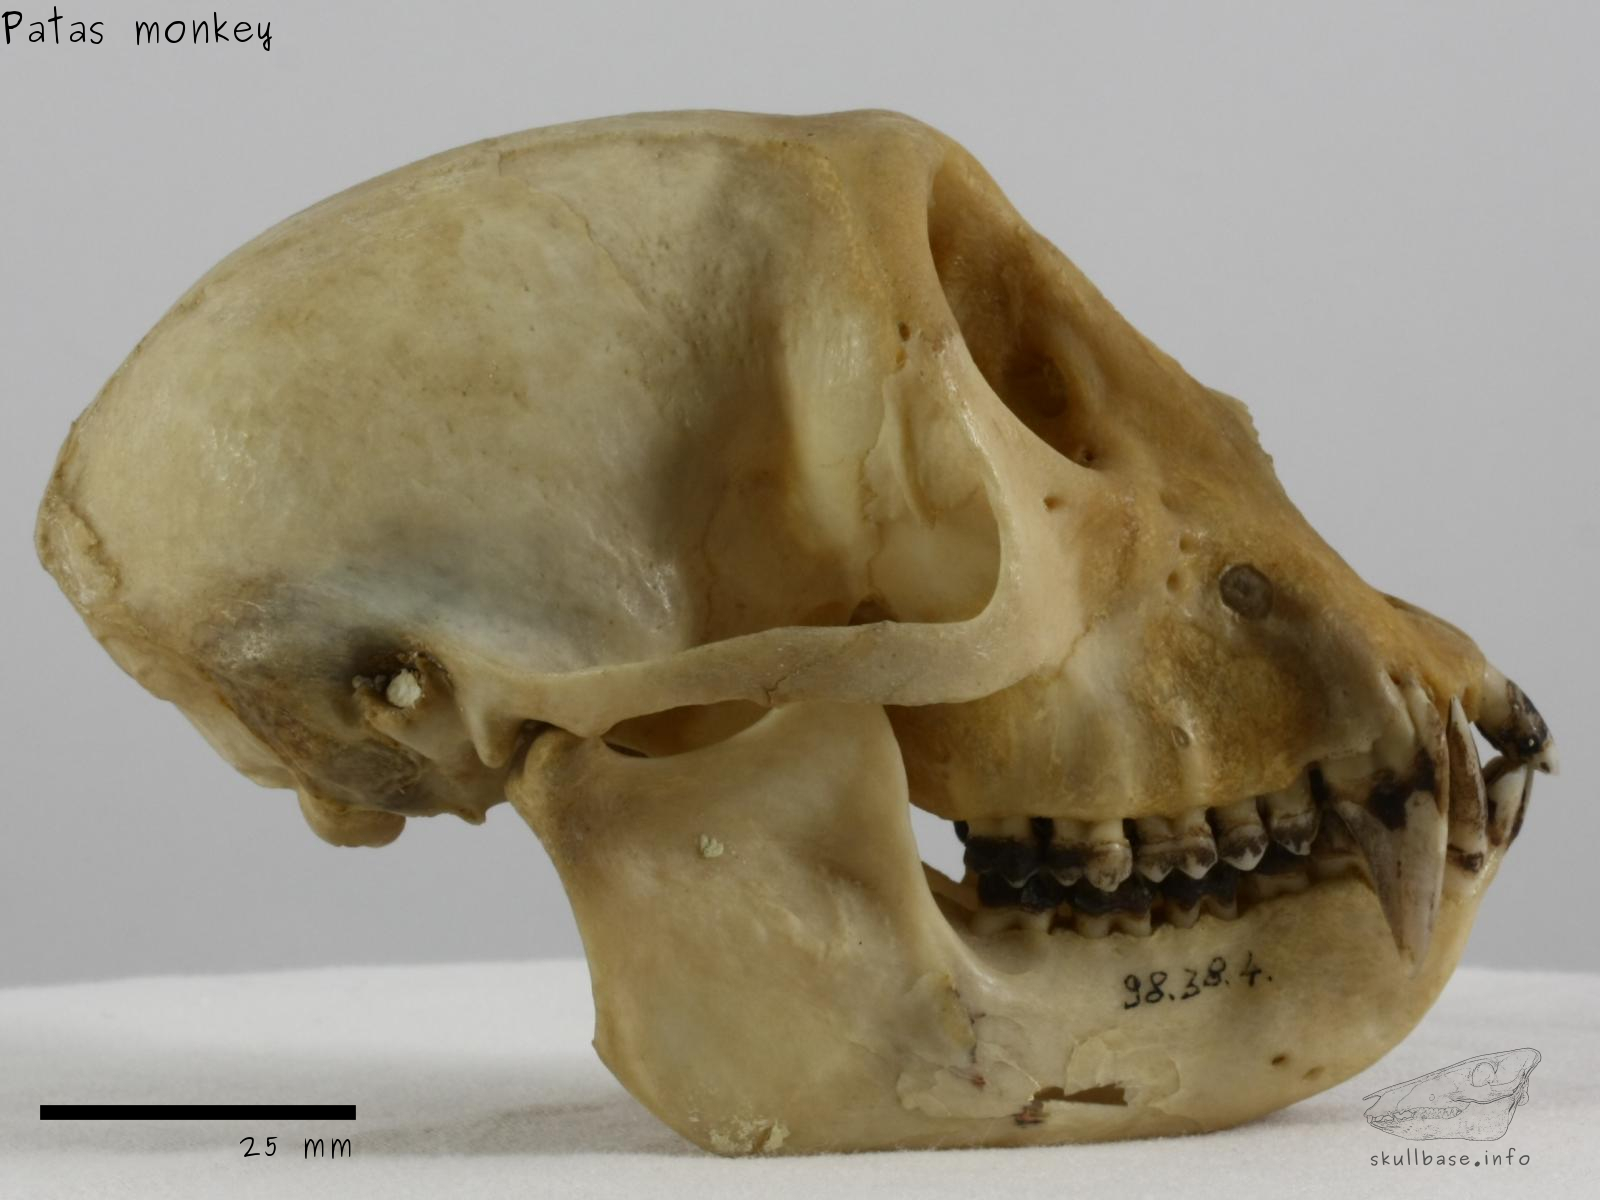 Patas monkey (Erythrocebus patas) skull lateral view